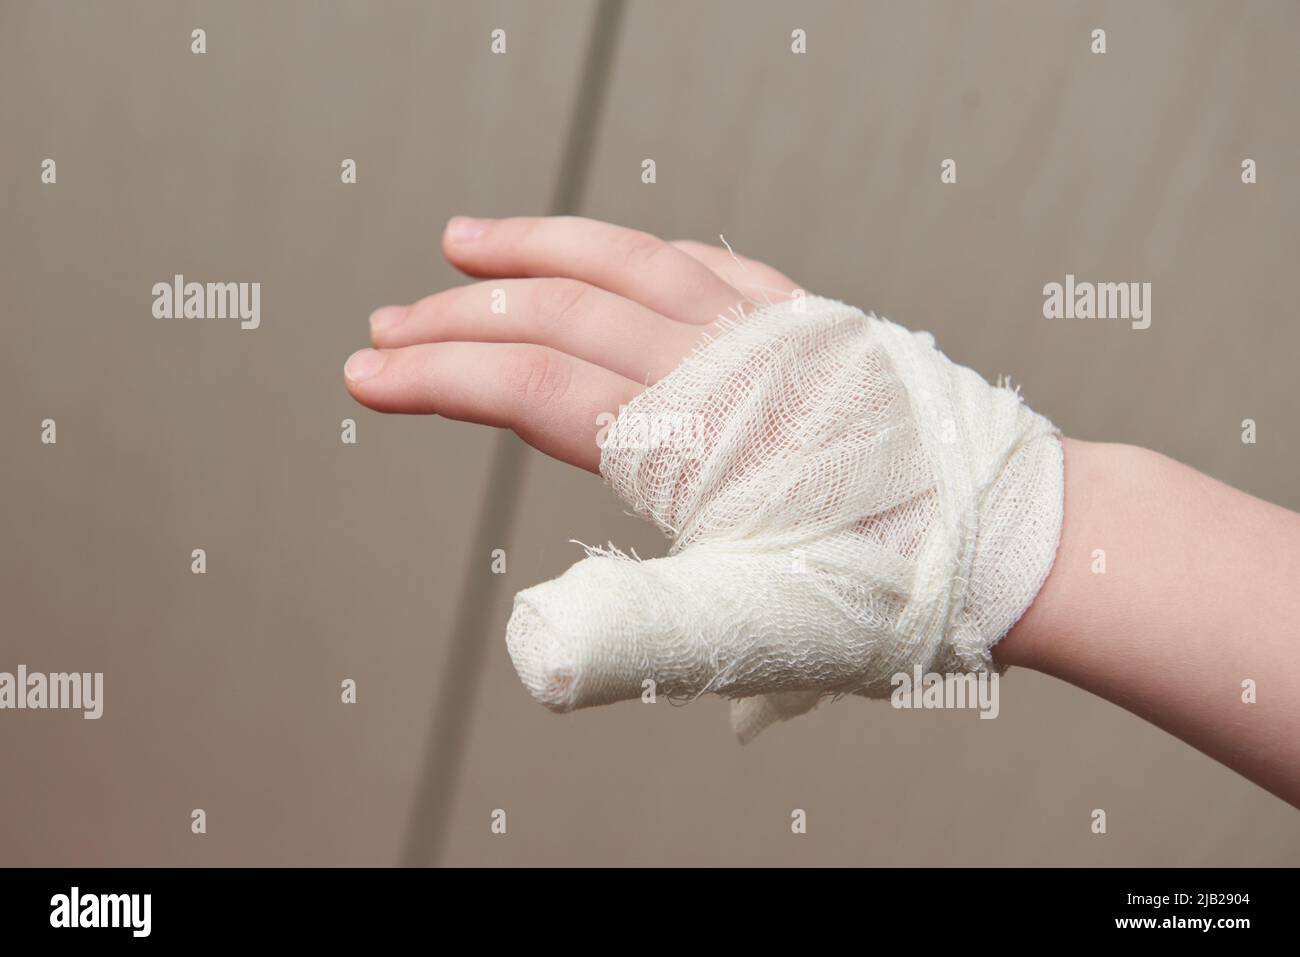 Bandaged child's hand with thumb close up Stock Photo